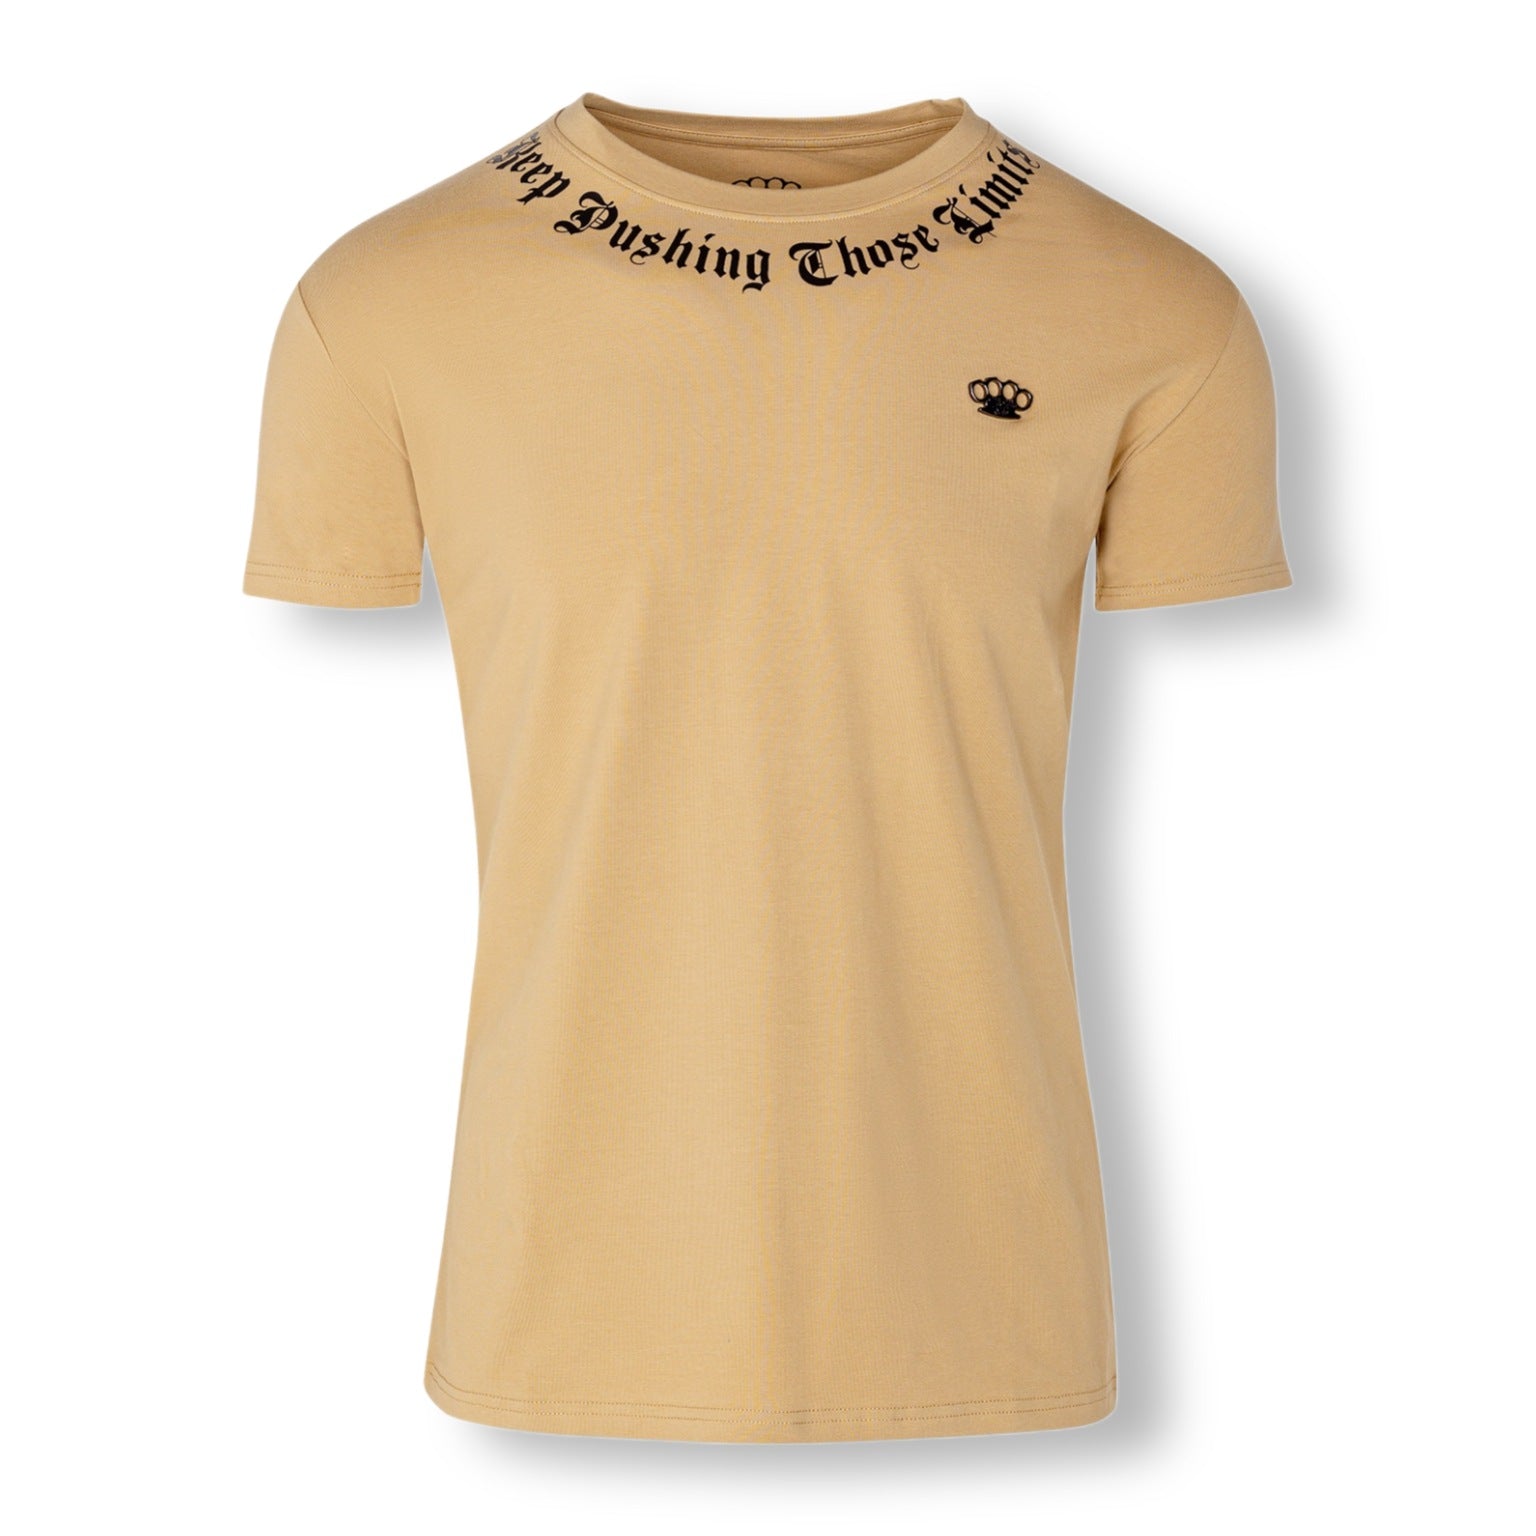 MVL "Keep pushing limits" T-shirt - beige